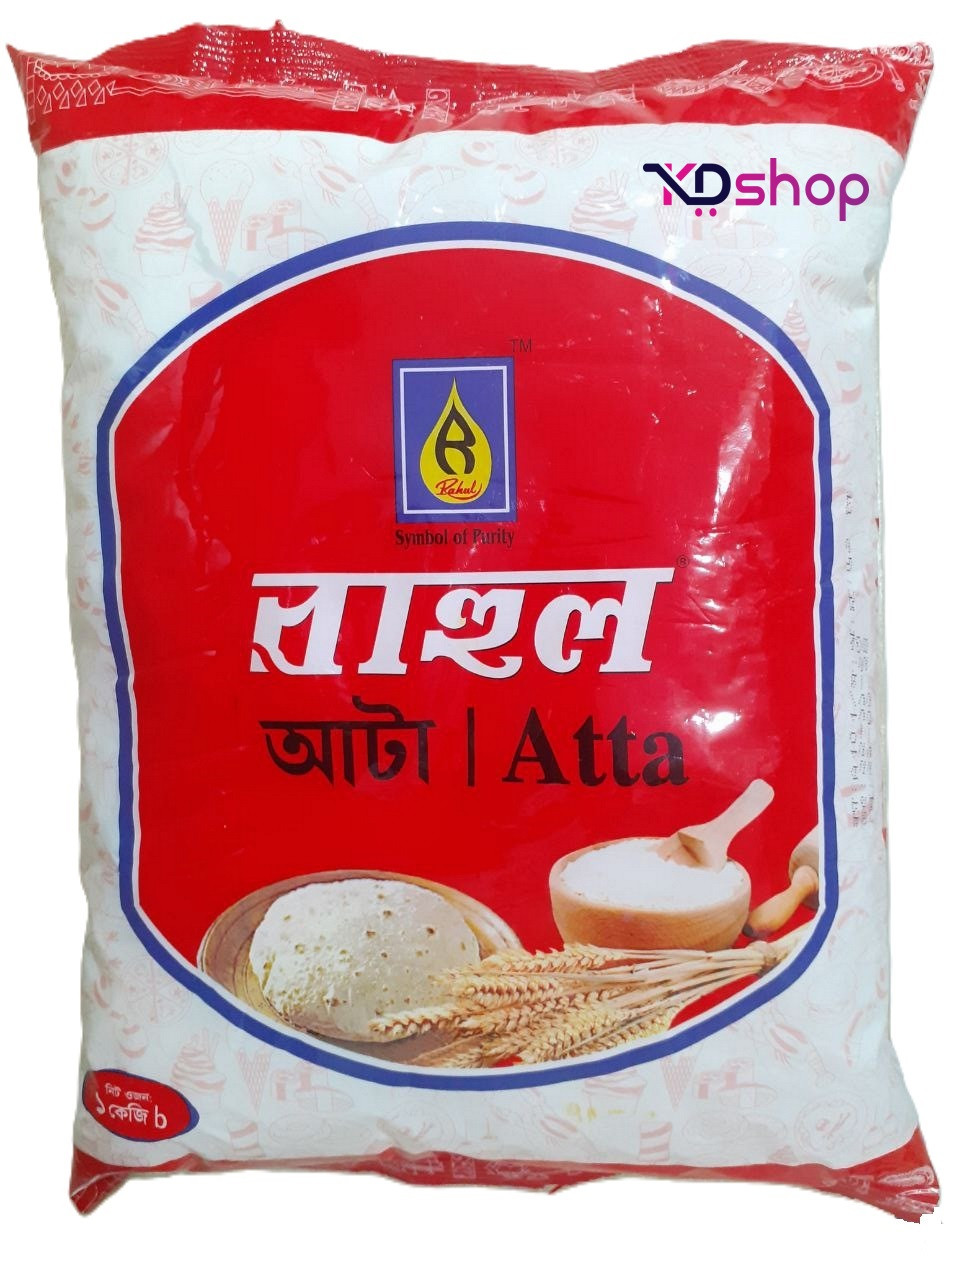 Rahul wheat flour